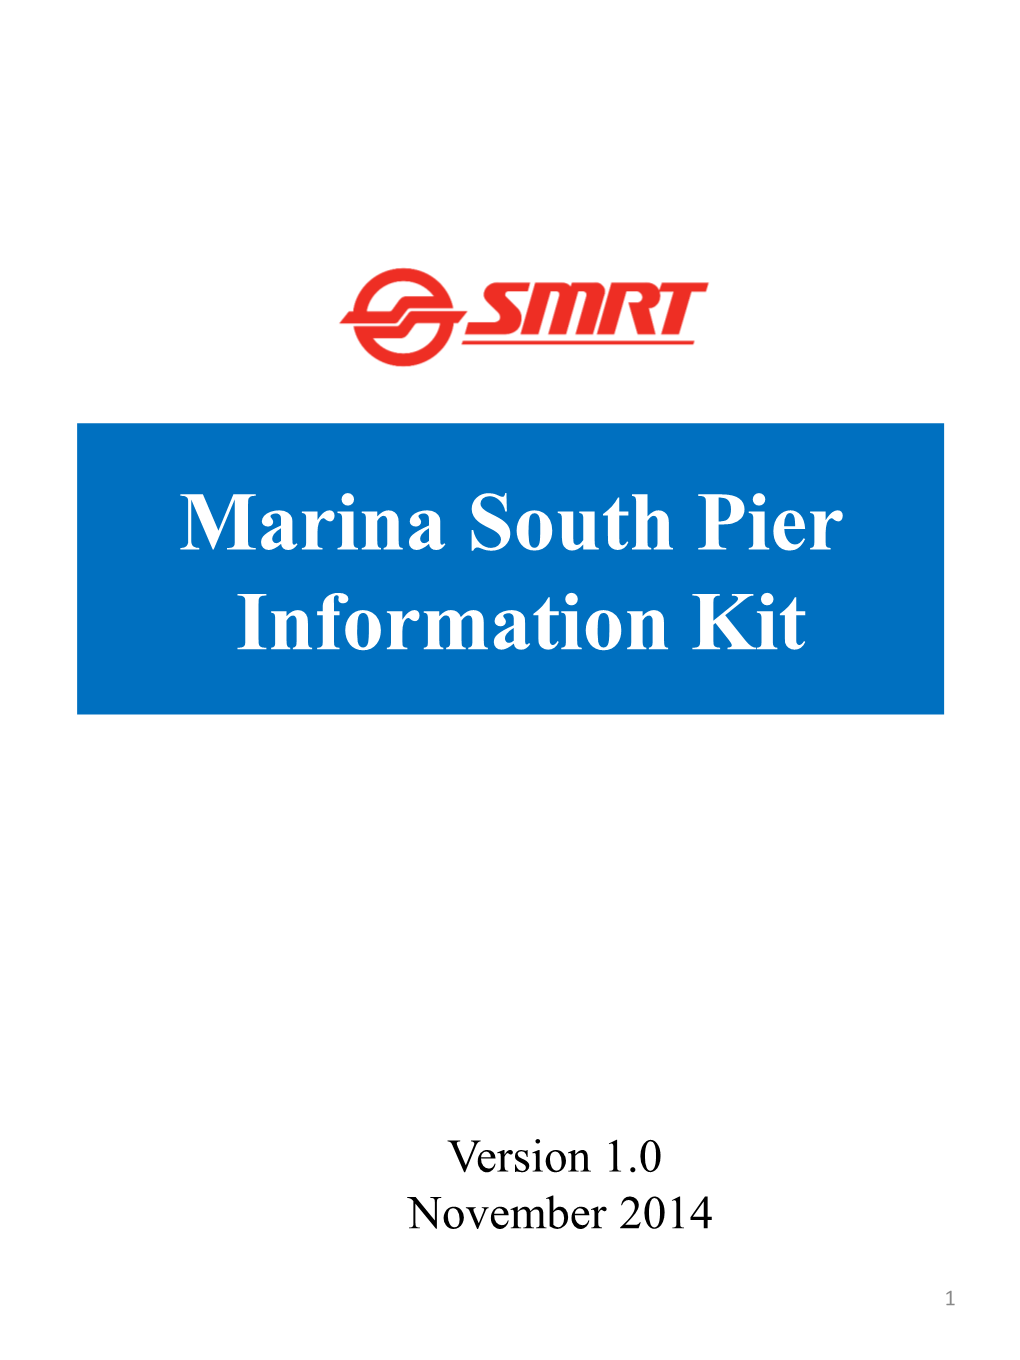 Marina South Pier Information Kit